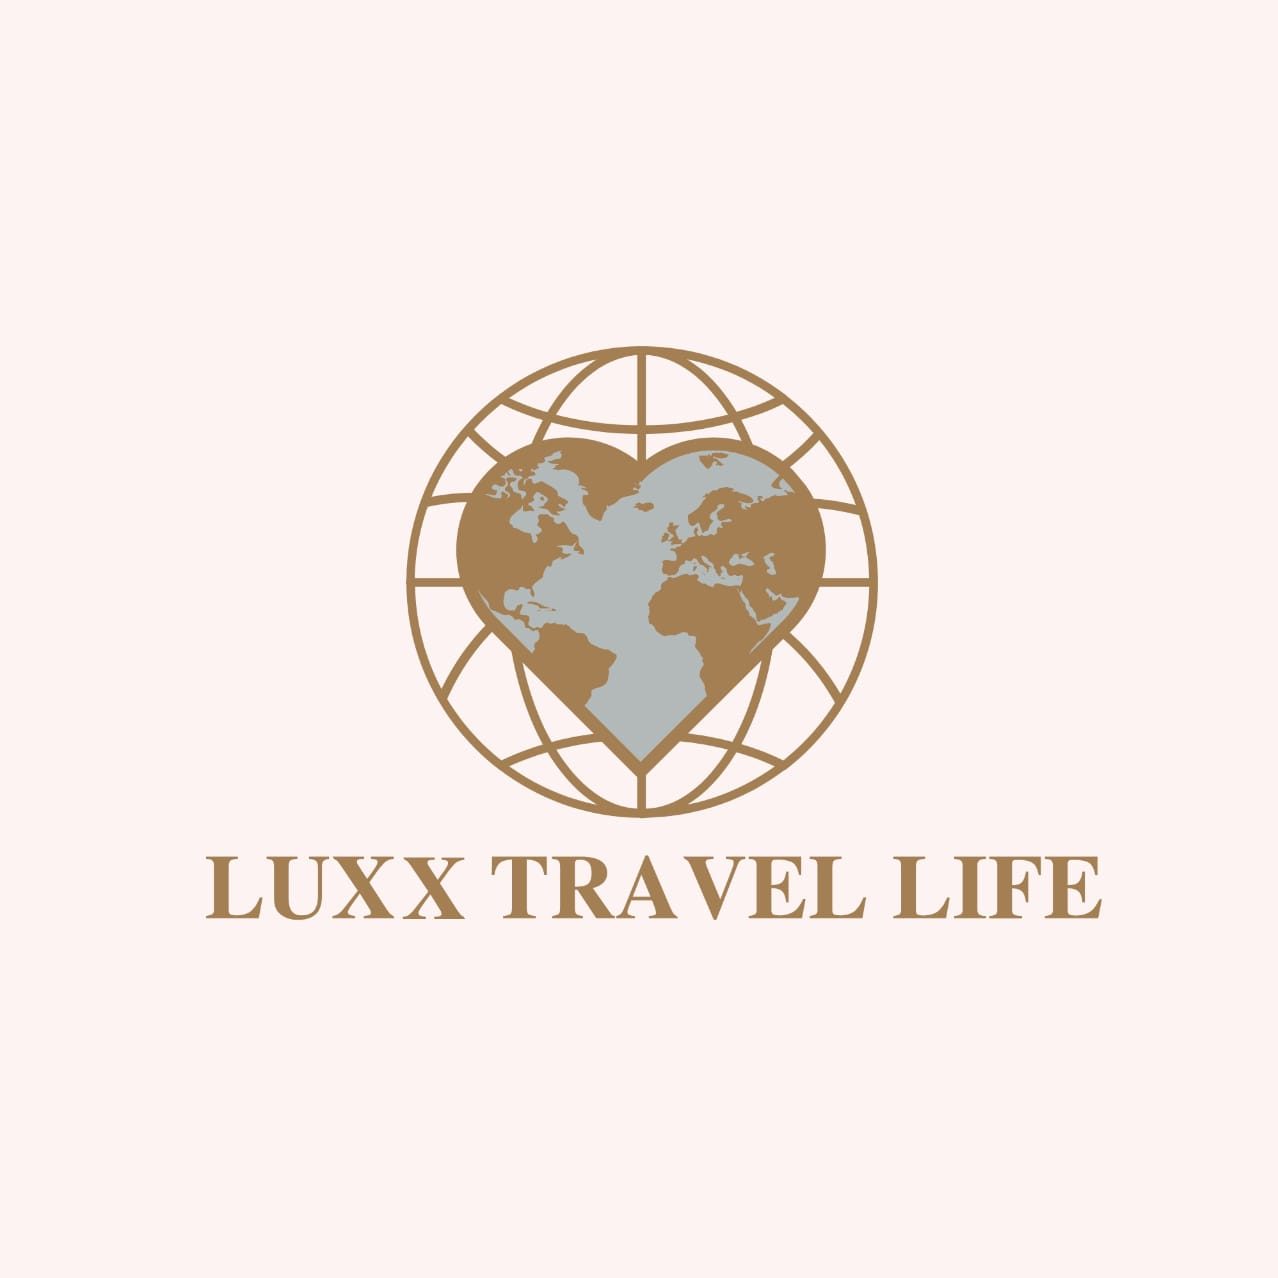 Luxx Trave Llife